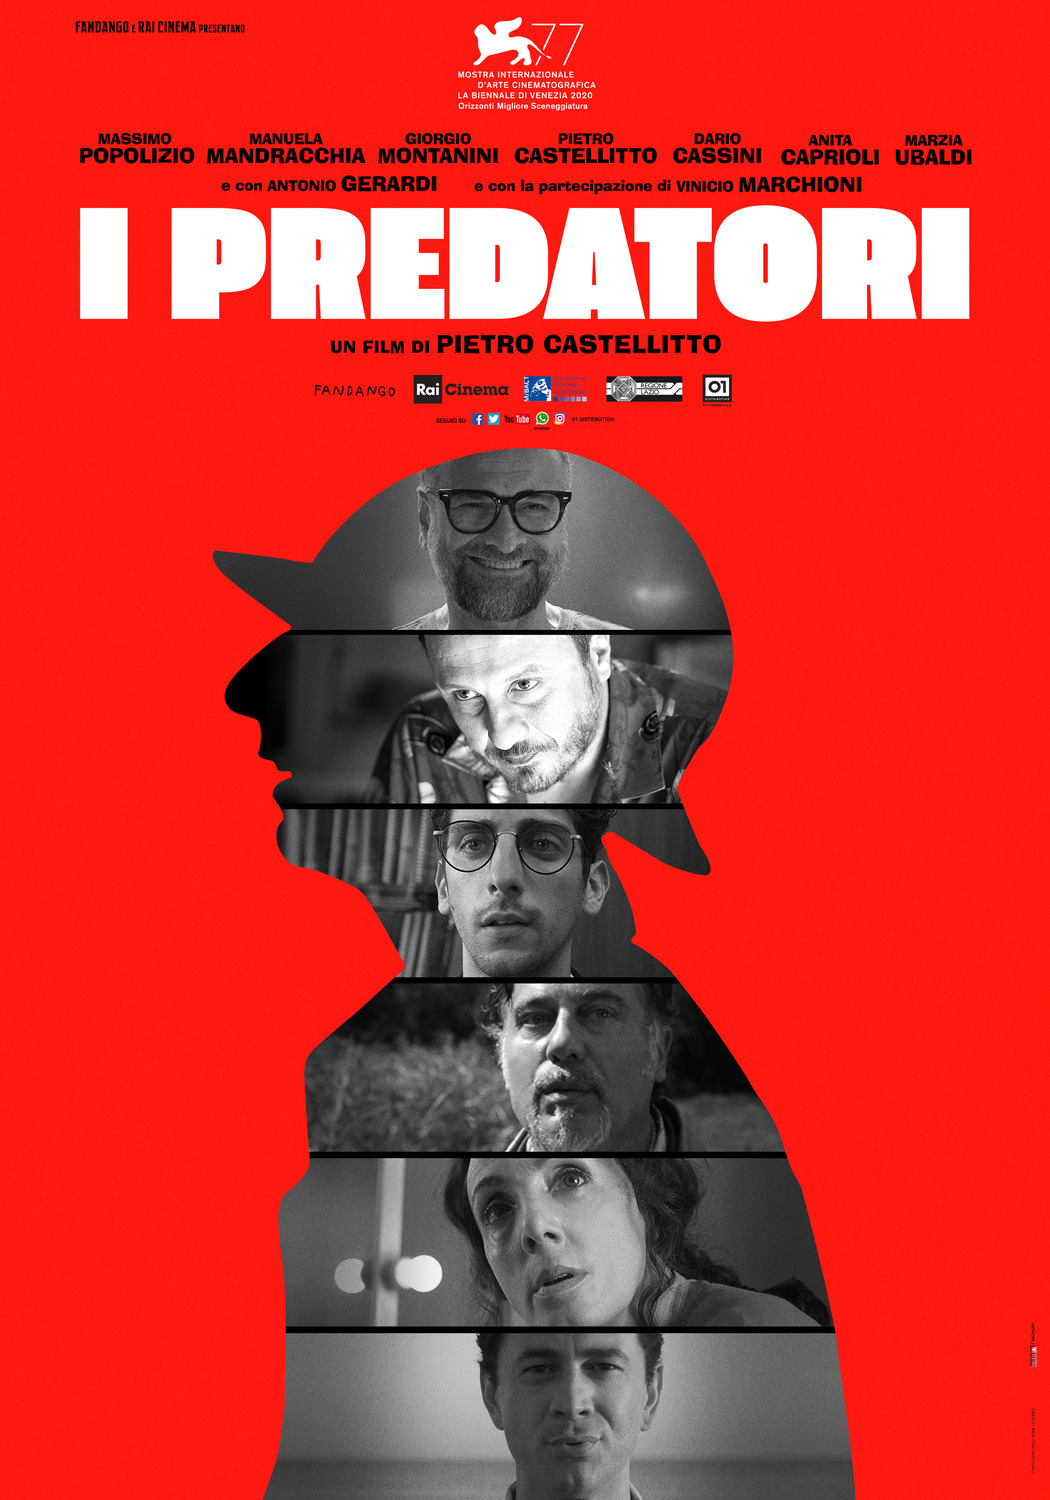 Extra Large Movie Poster Image for I predatori (#2 of 2)